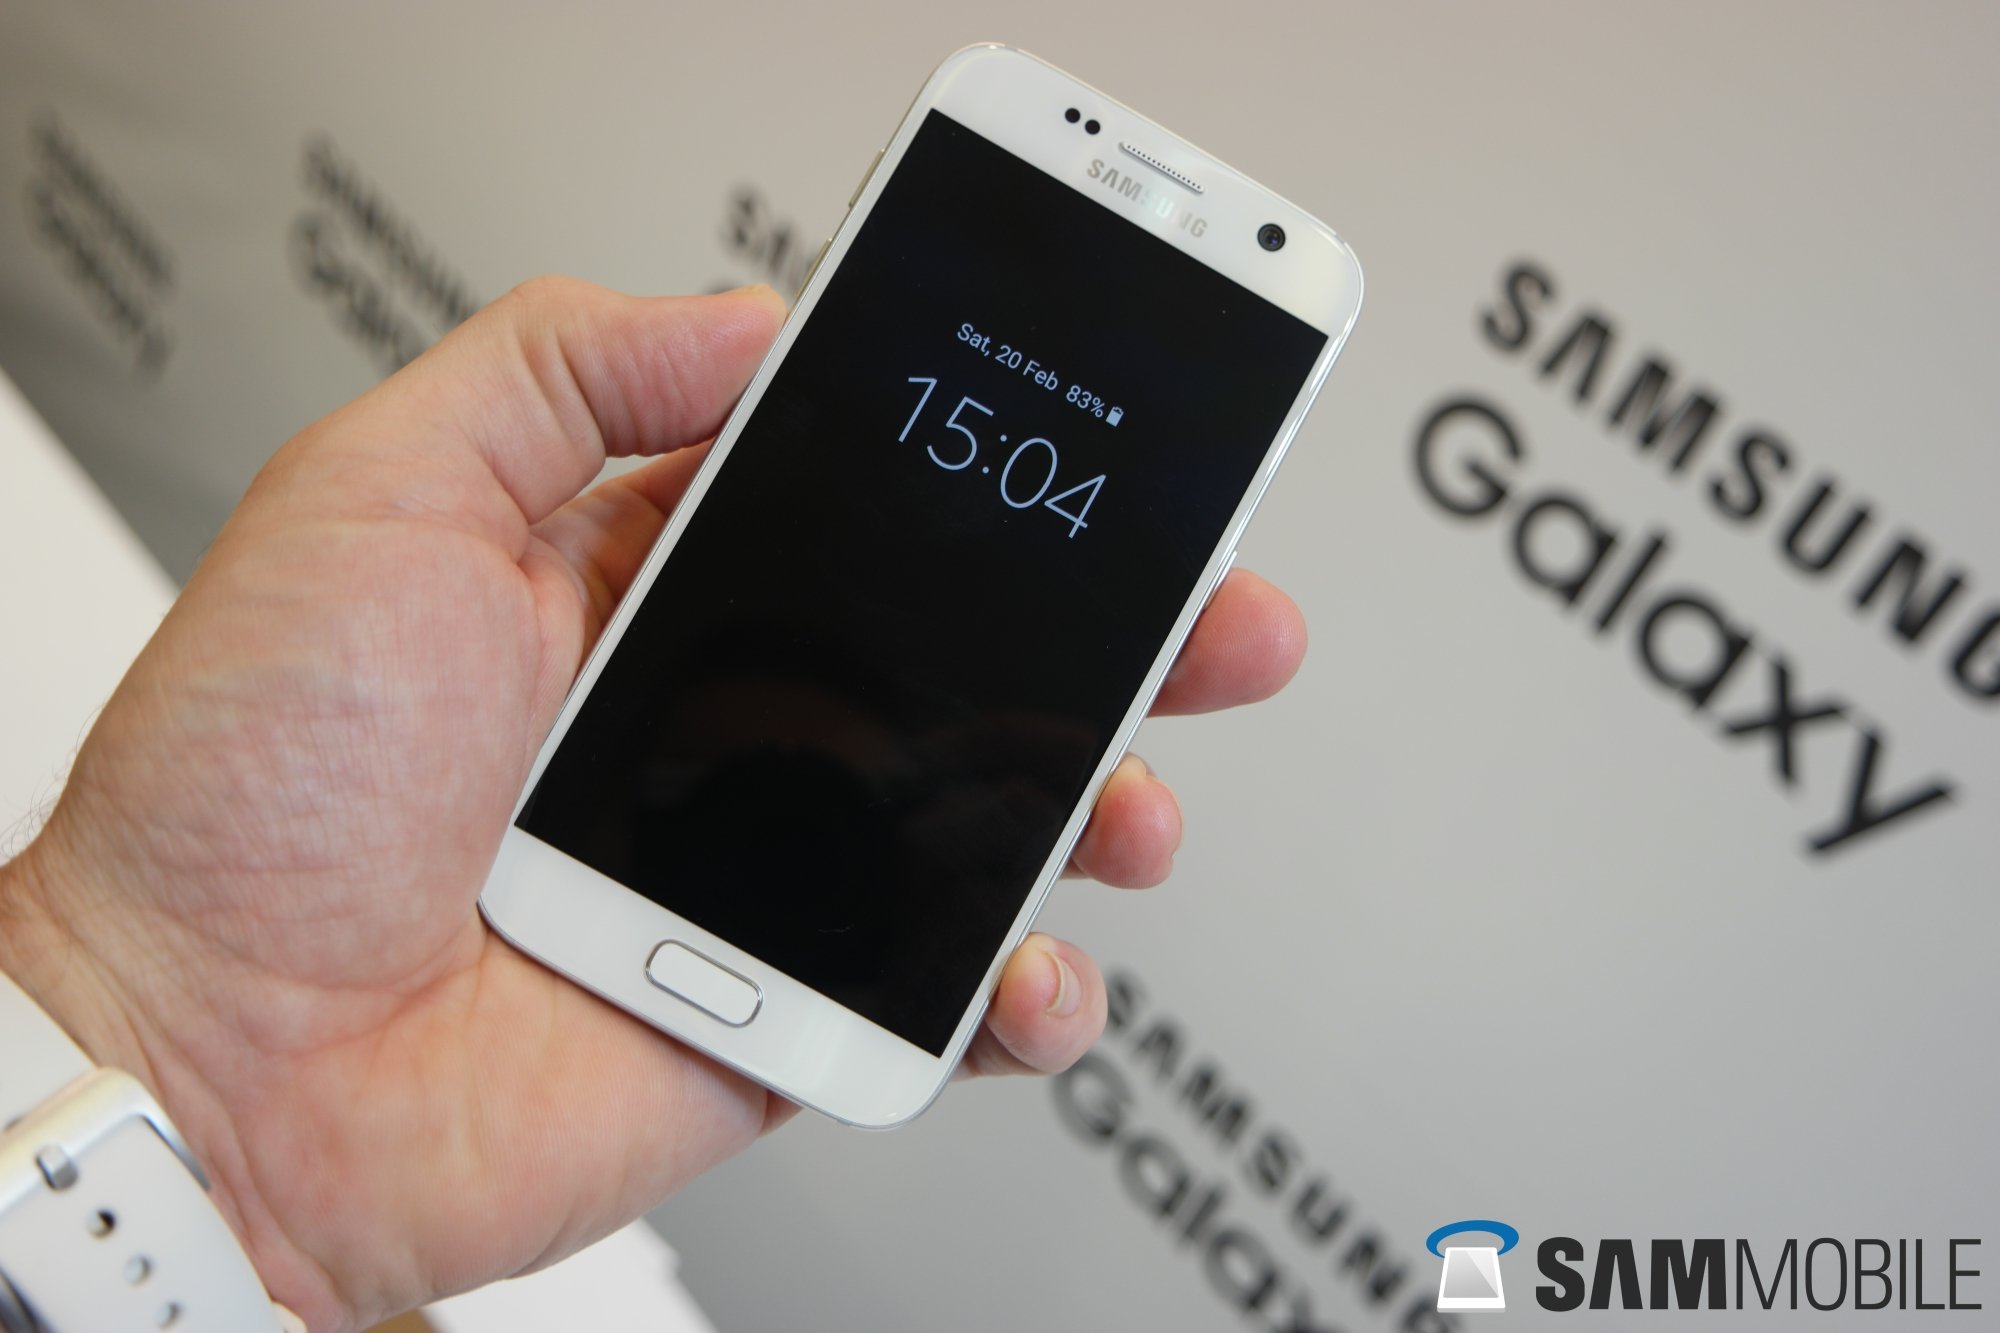 Kinderen kruipen Profetie Galaxy S7 mini rumored with Snapdragon 820 or Exynos 8890 processor -  SamMobile - SamMobile